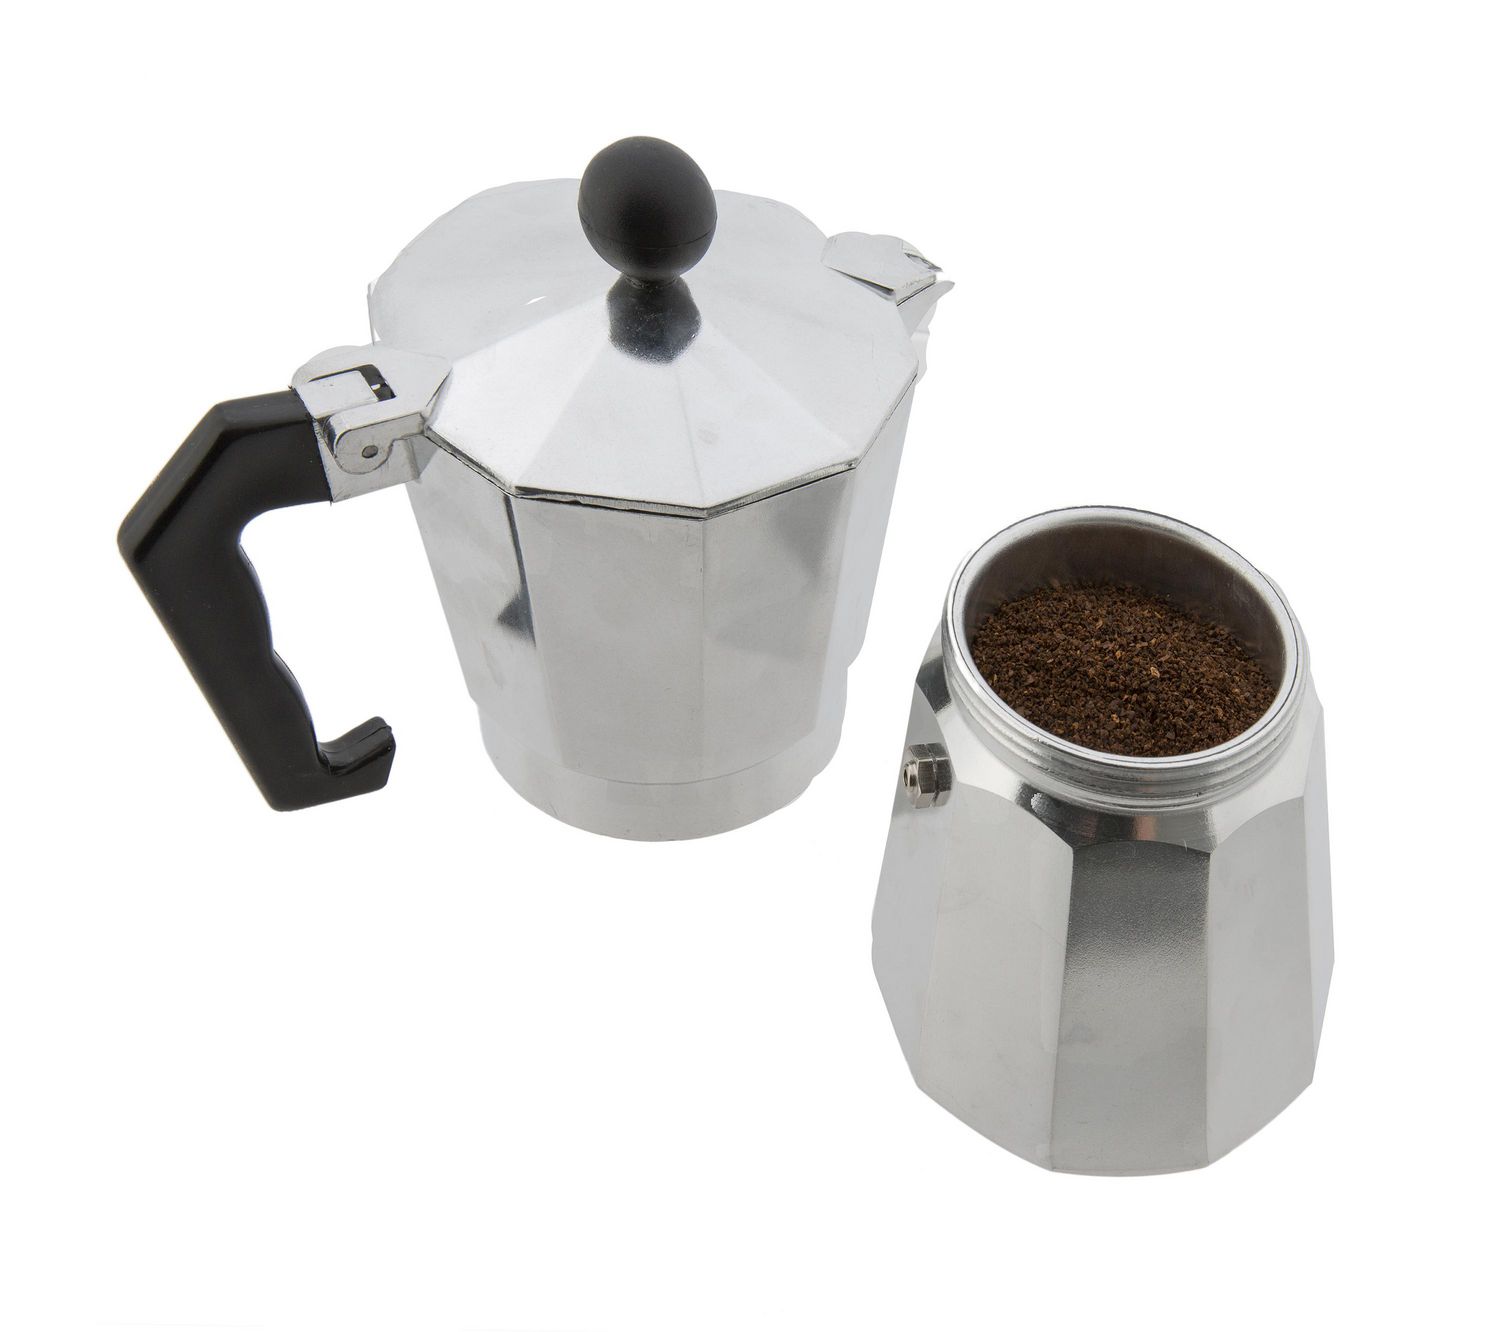 Primula PES-3312 Aluminum Stovetop Espresso Coffee Maker, 12 Cup - Bed Bath  & Beyond - 13187934